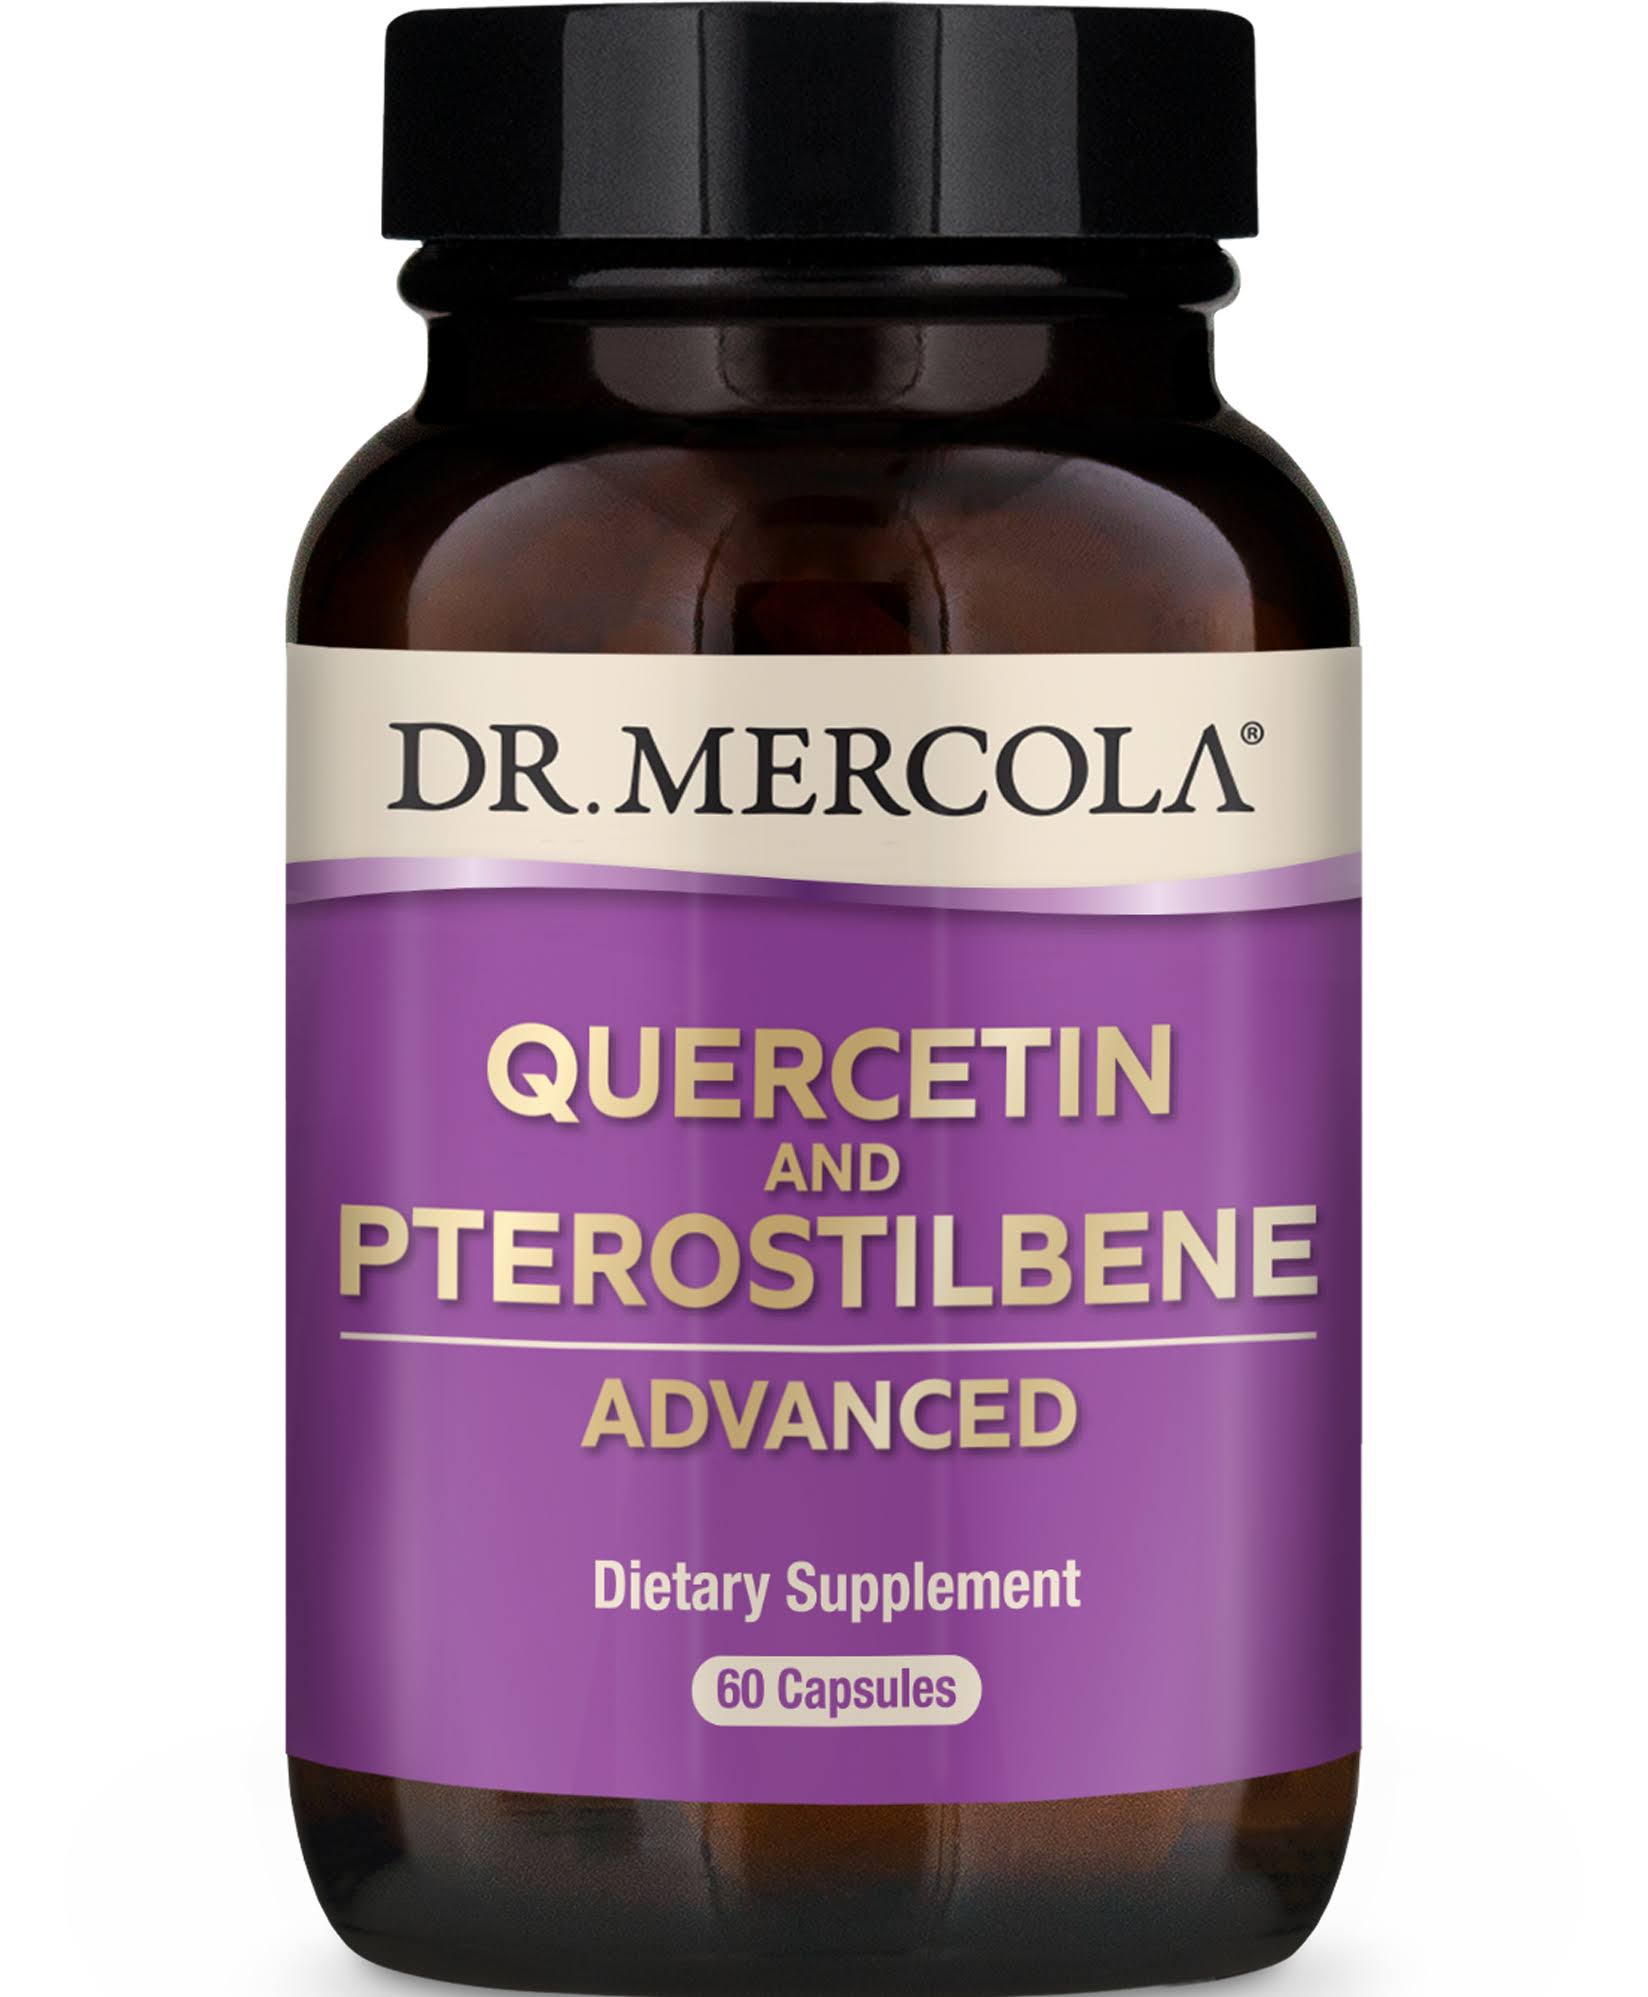 Dr. Mercola Quercetin and Pterostilbene, Advanced, Capsules - 60 capsules